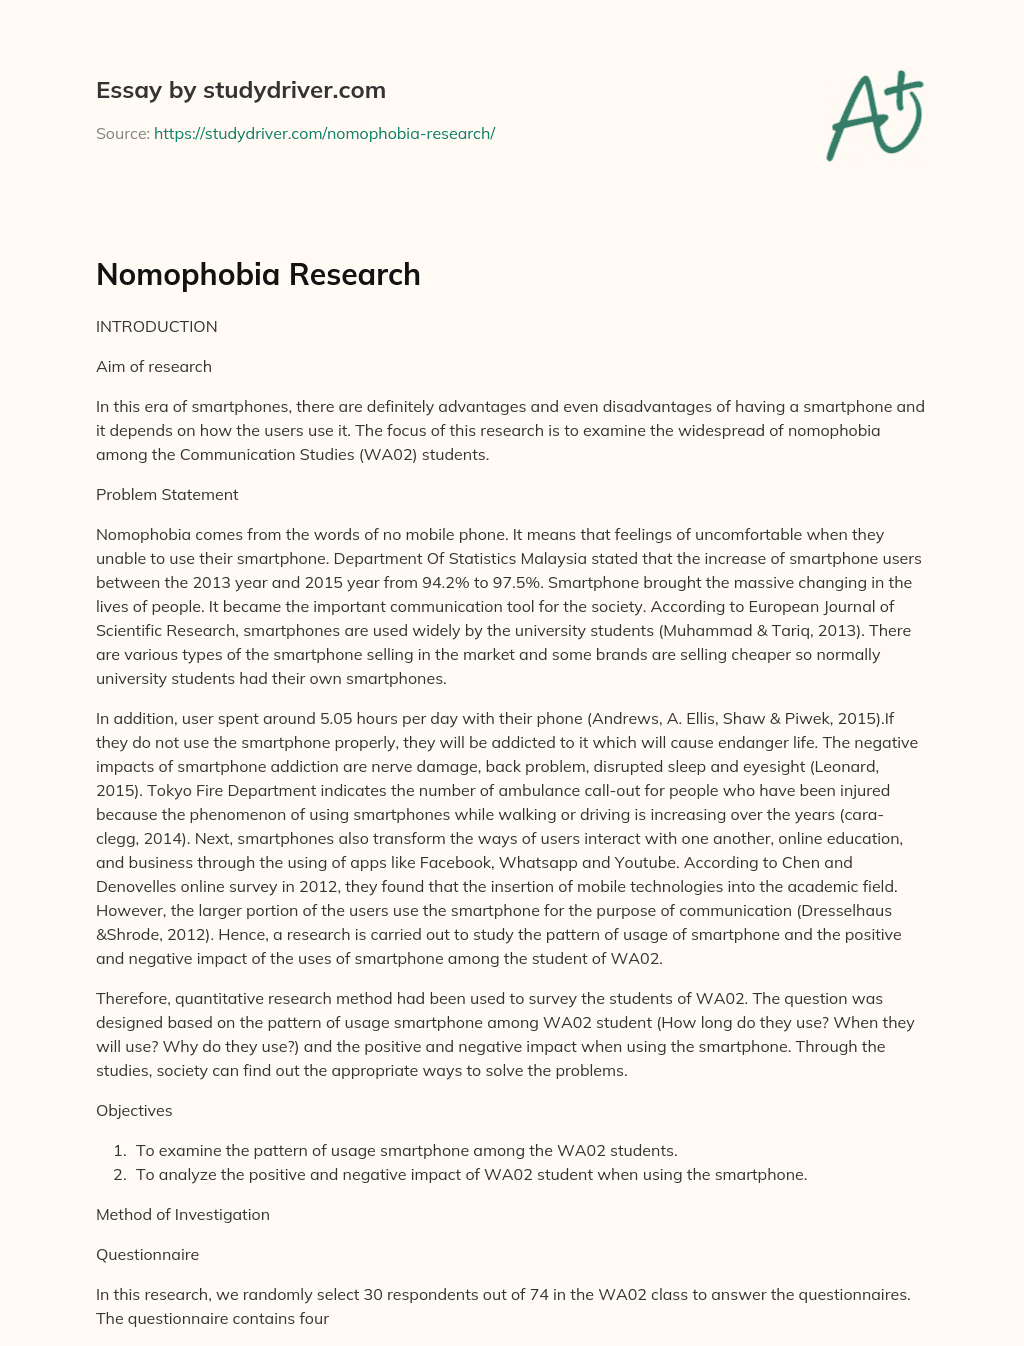 Nomophobia Research essay